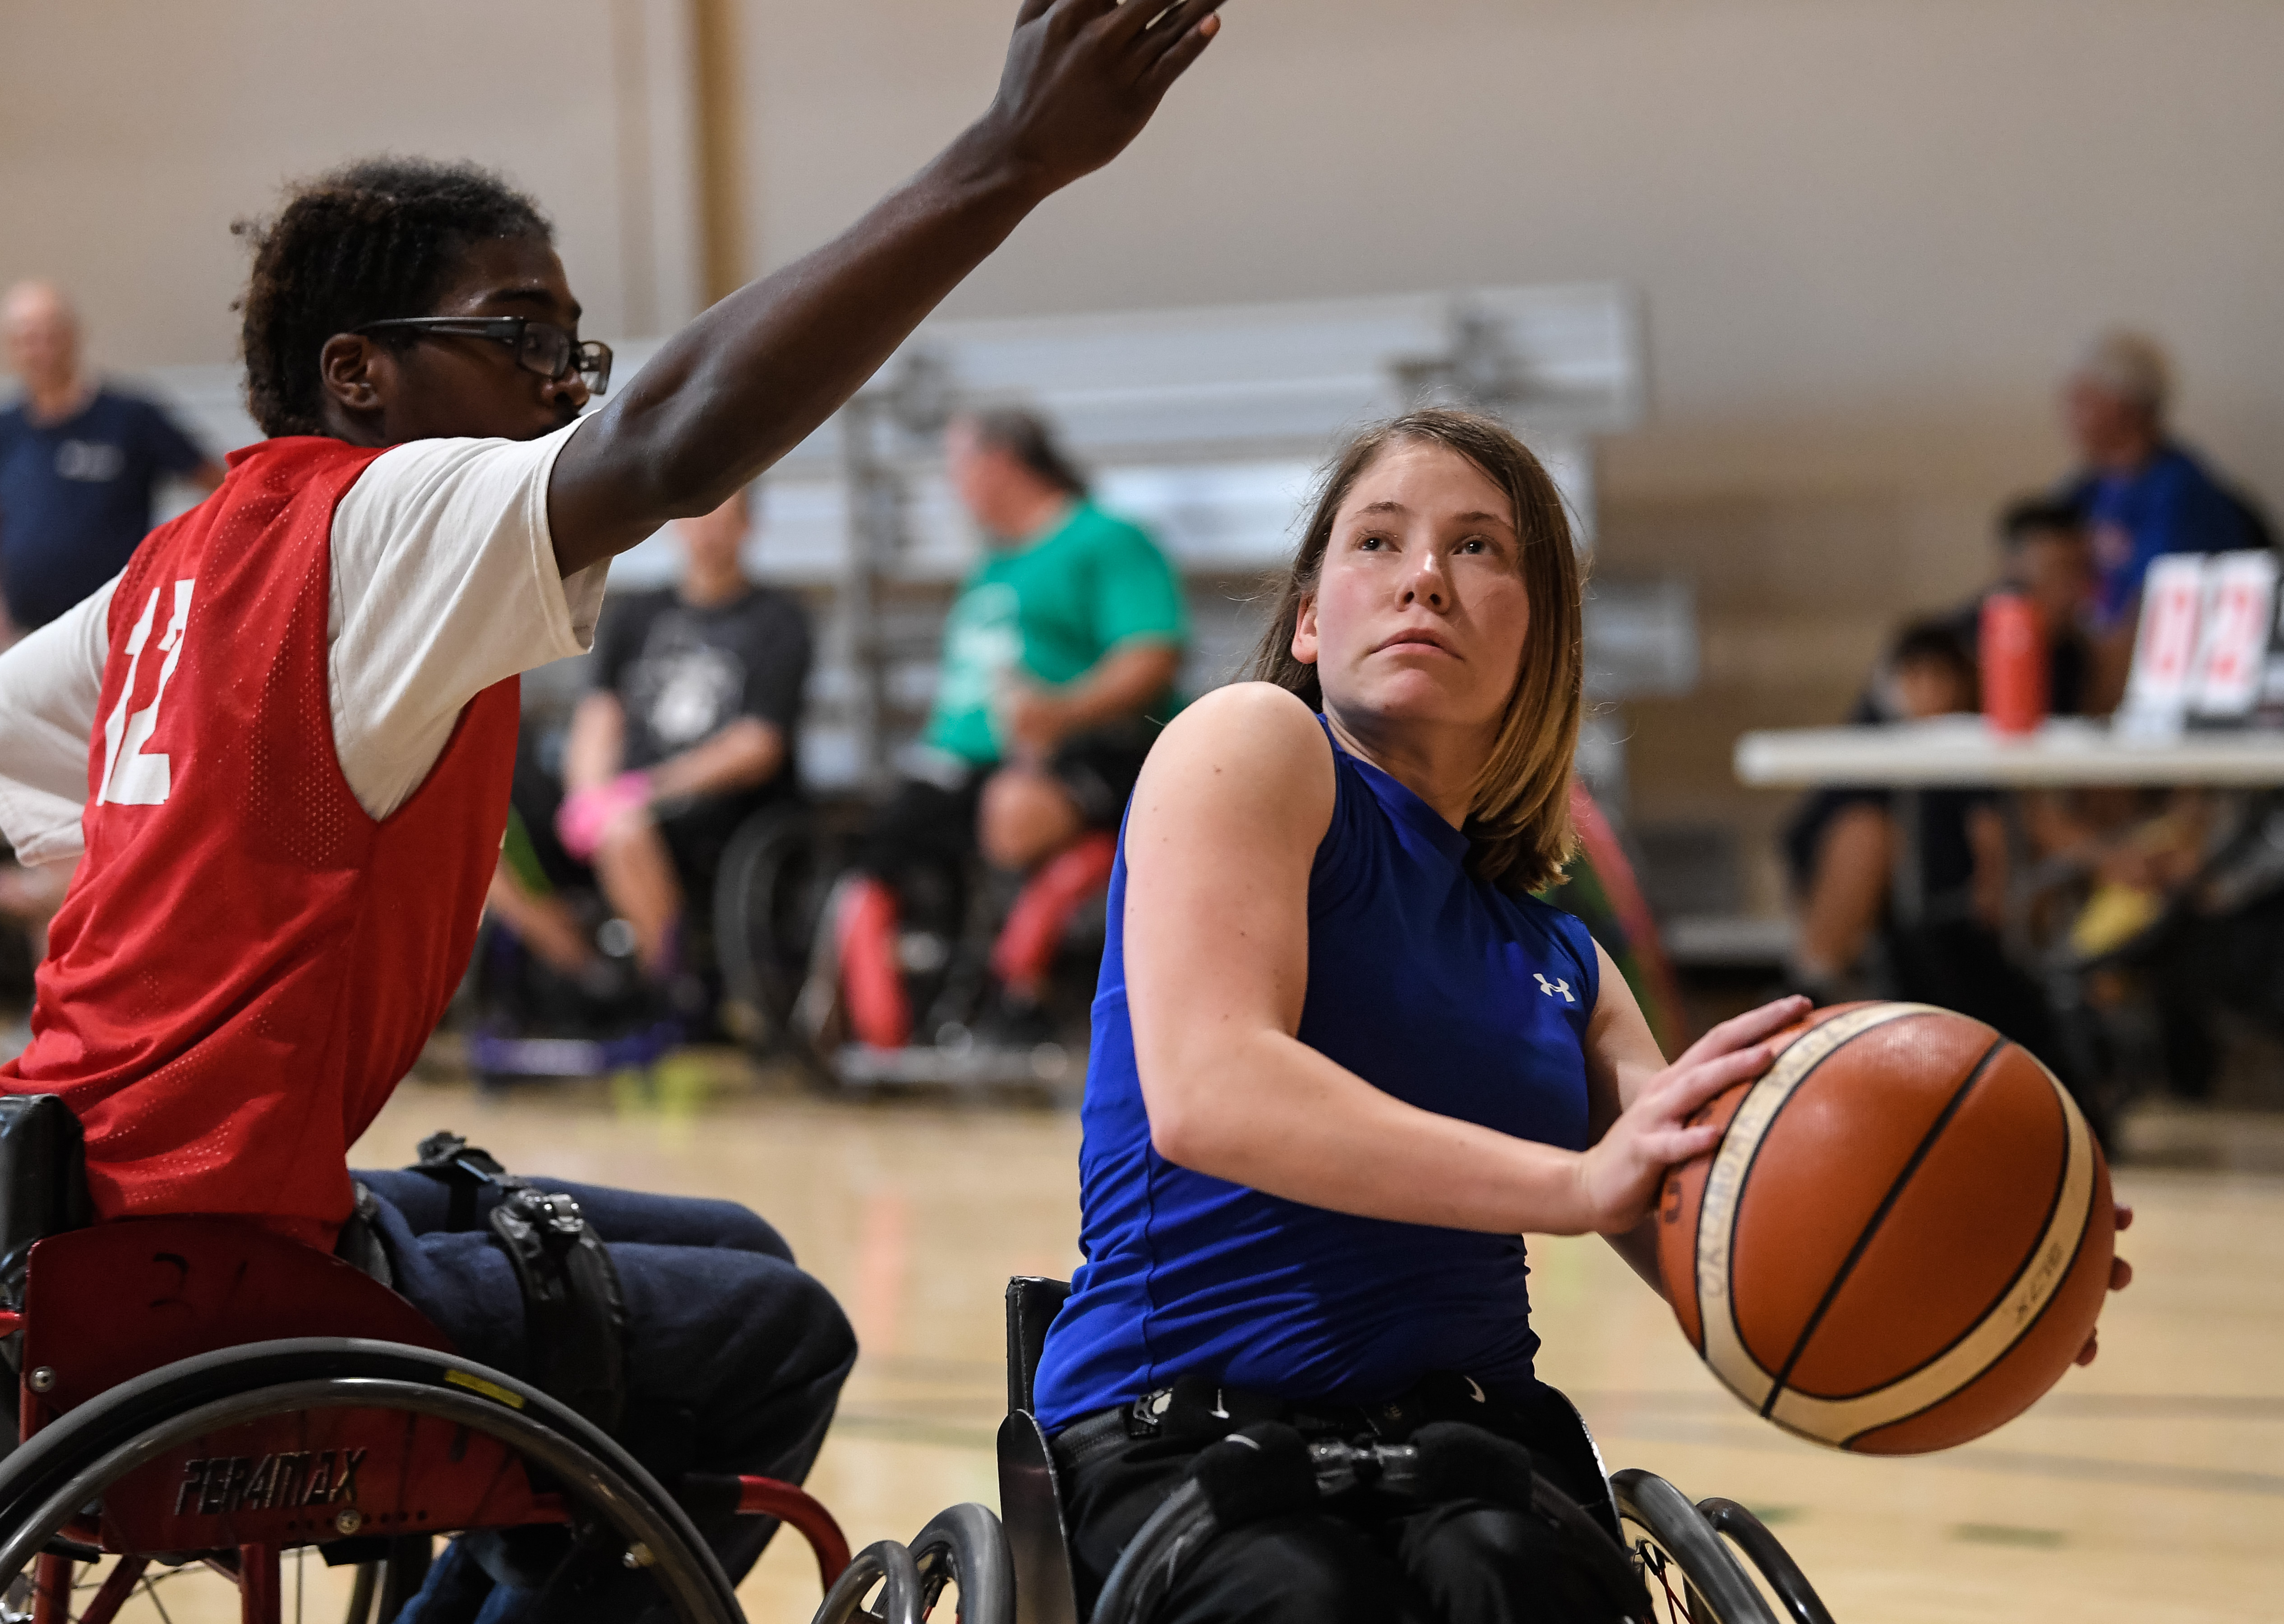 Endeavor Games Athlete Wheelchair Basketball